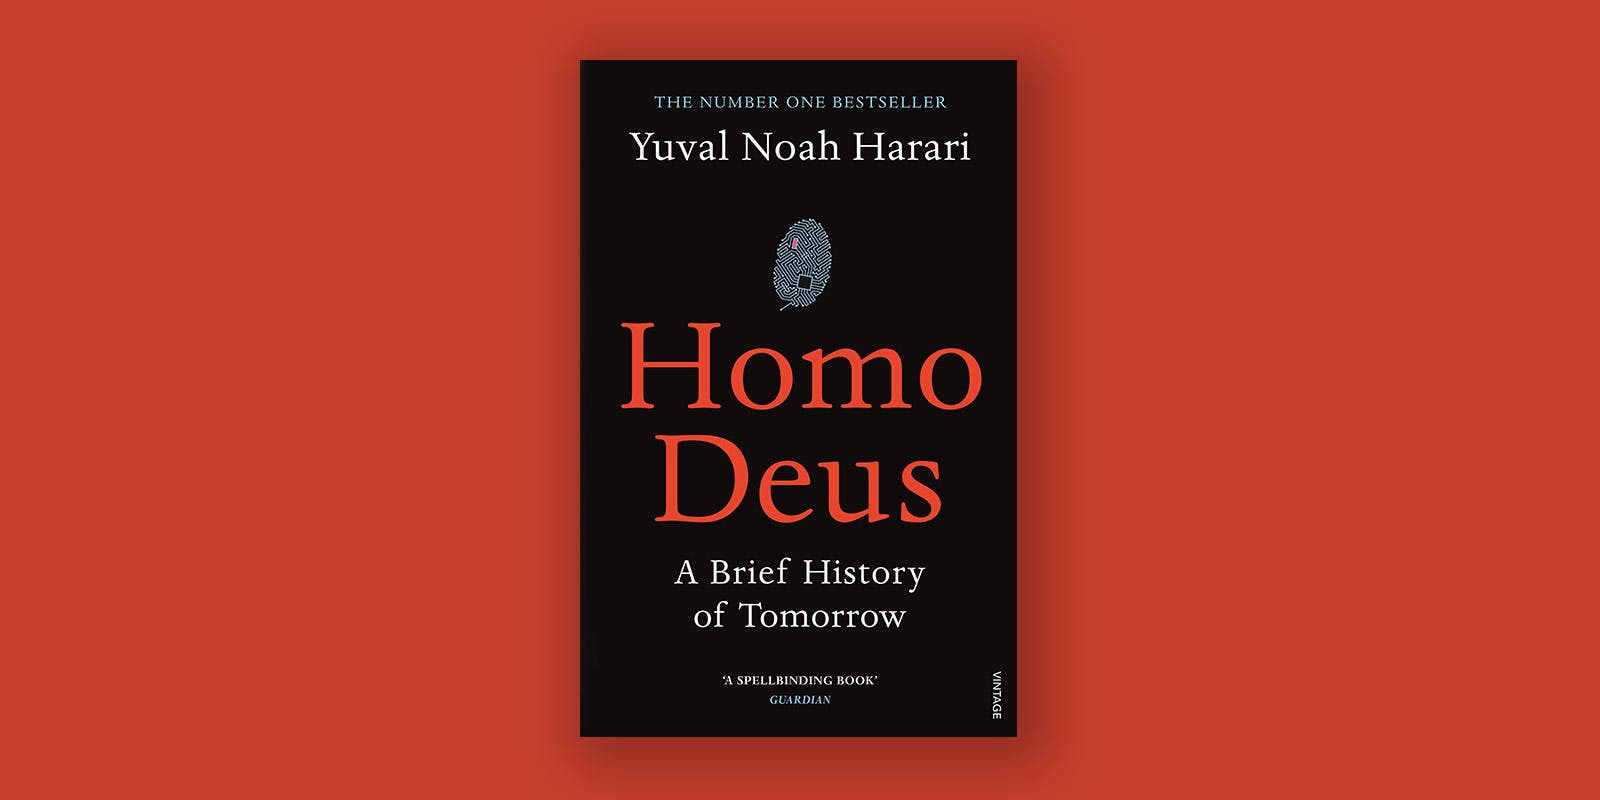 Homo Deus book club notes